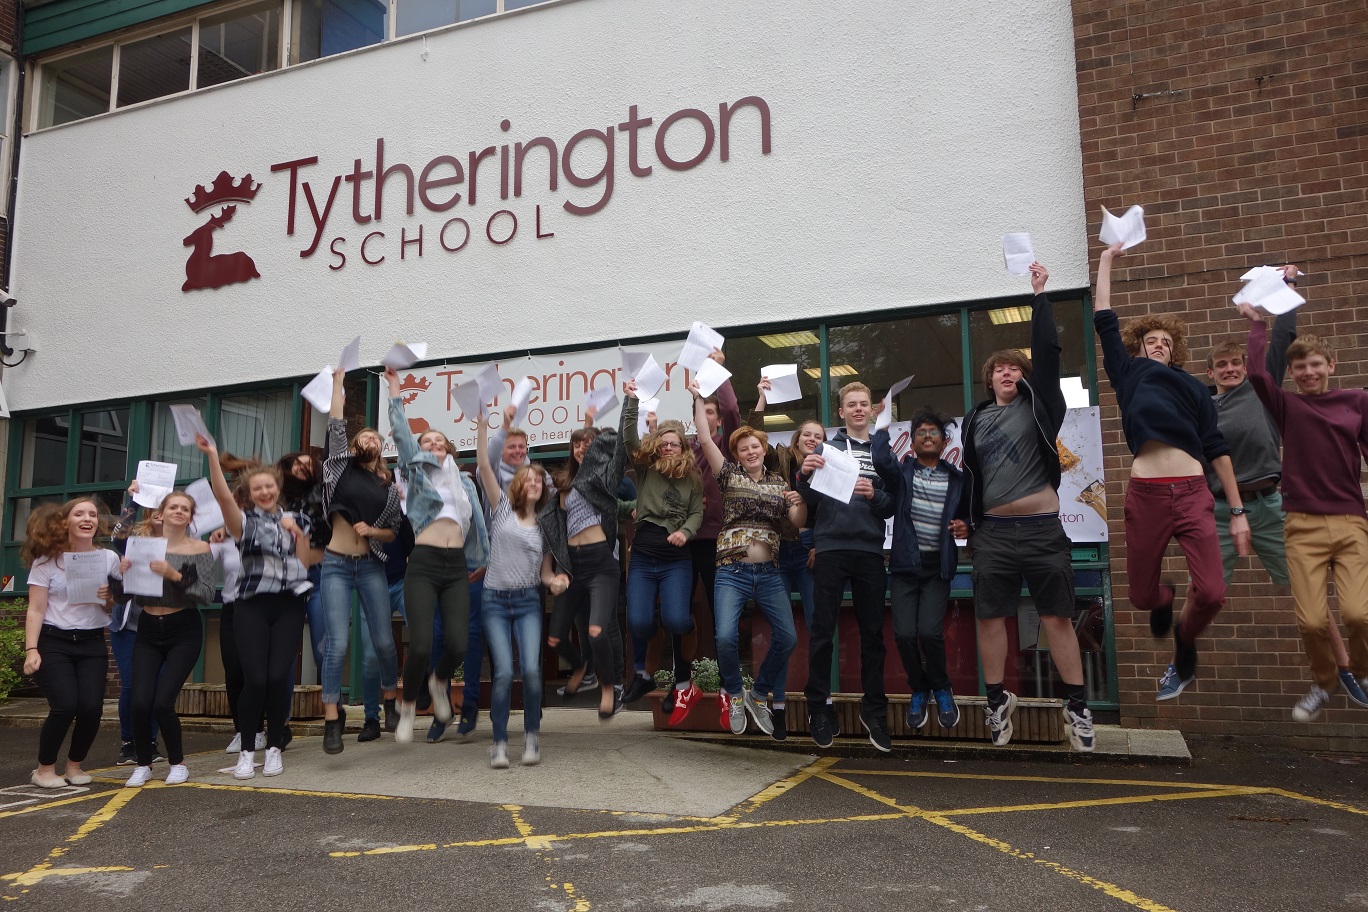 Tytherington jumps for joy as it smashes GCSE records